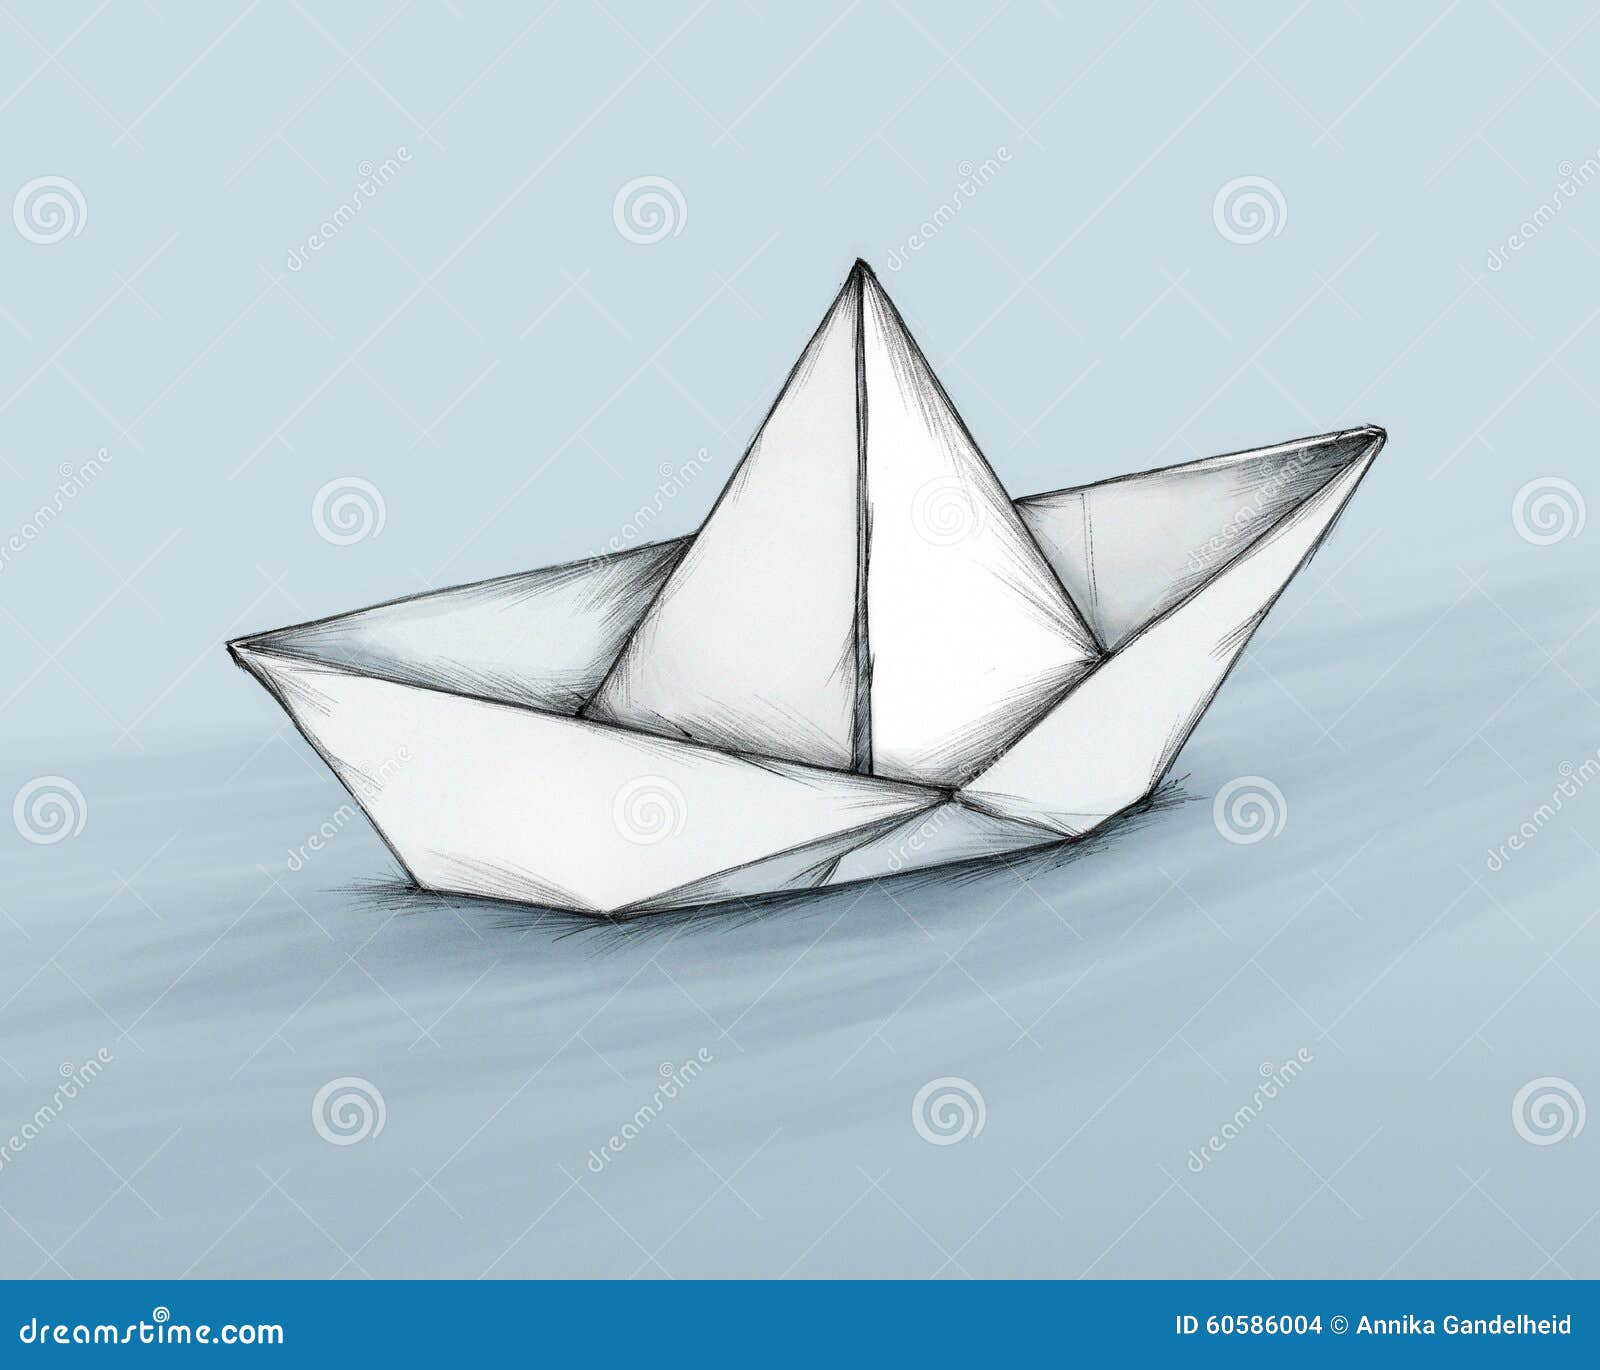 Simple paper boat stock illustration. Illustration of ...